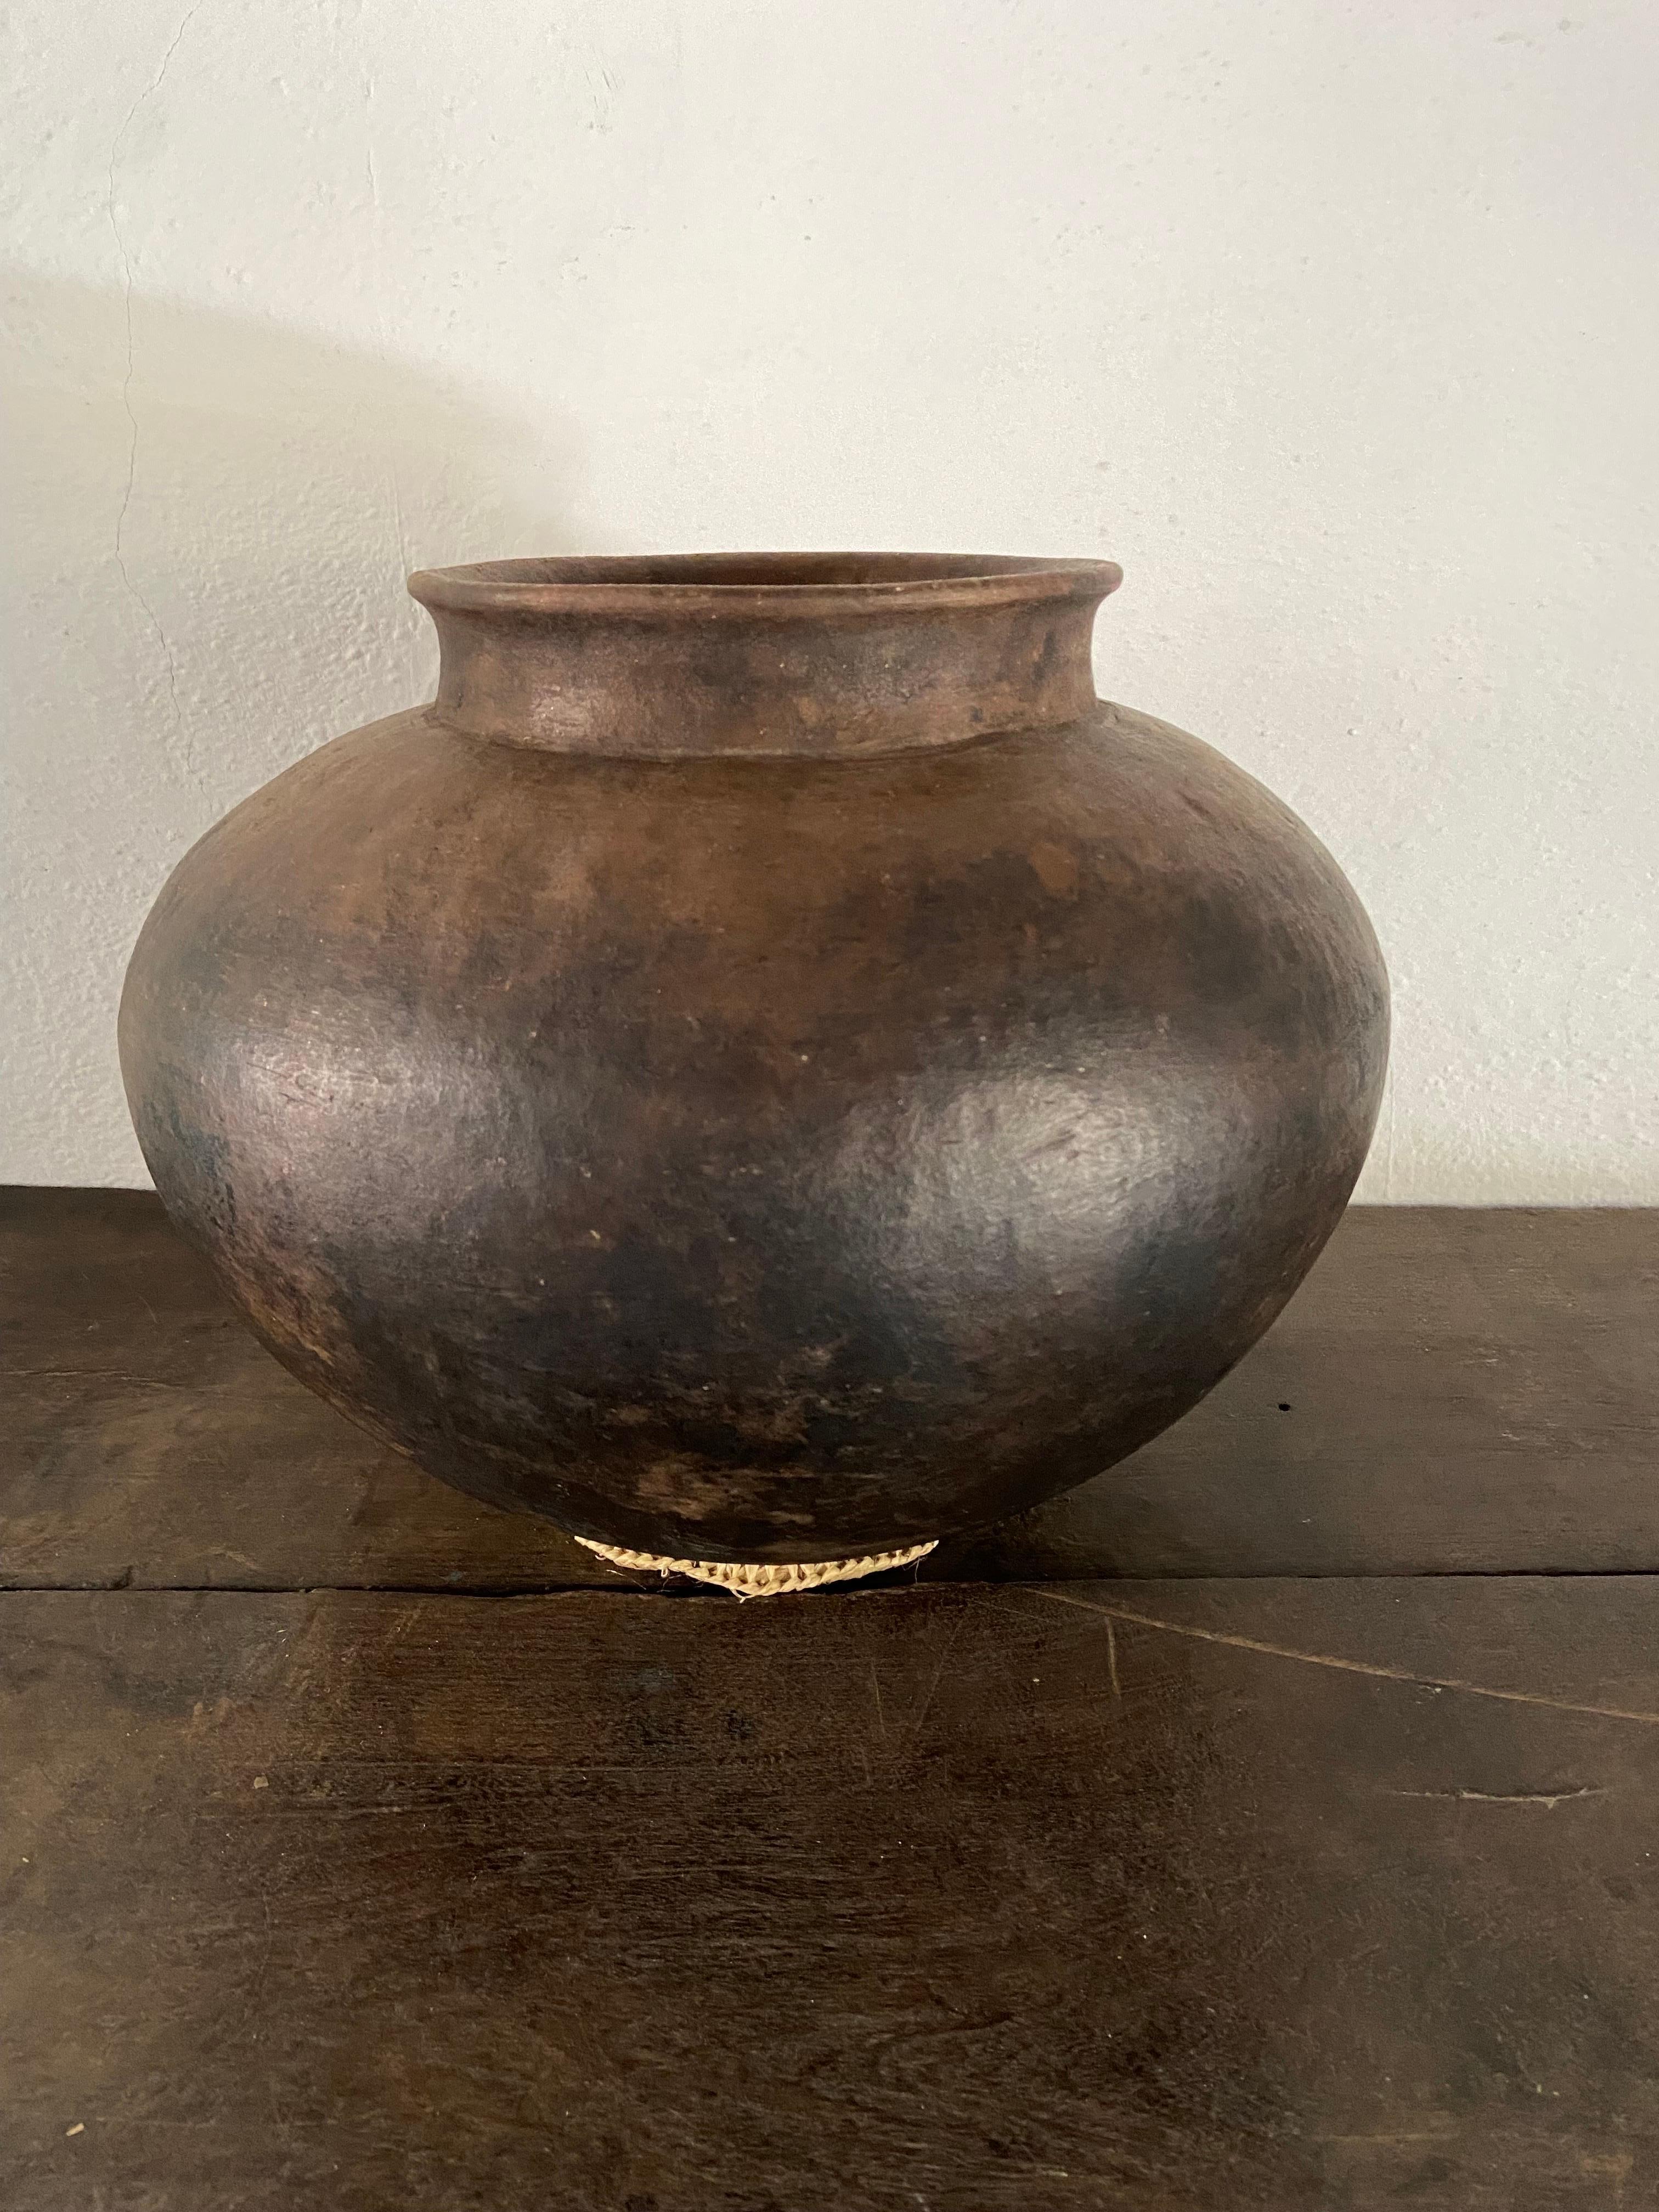 Fired Terracotta Water Pot From The Mixteca Region Of Oaxaca, Mexico, Circa 1960´s